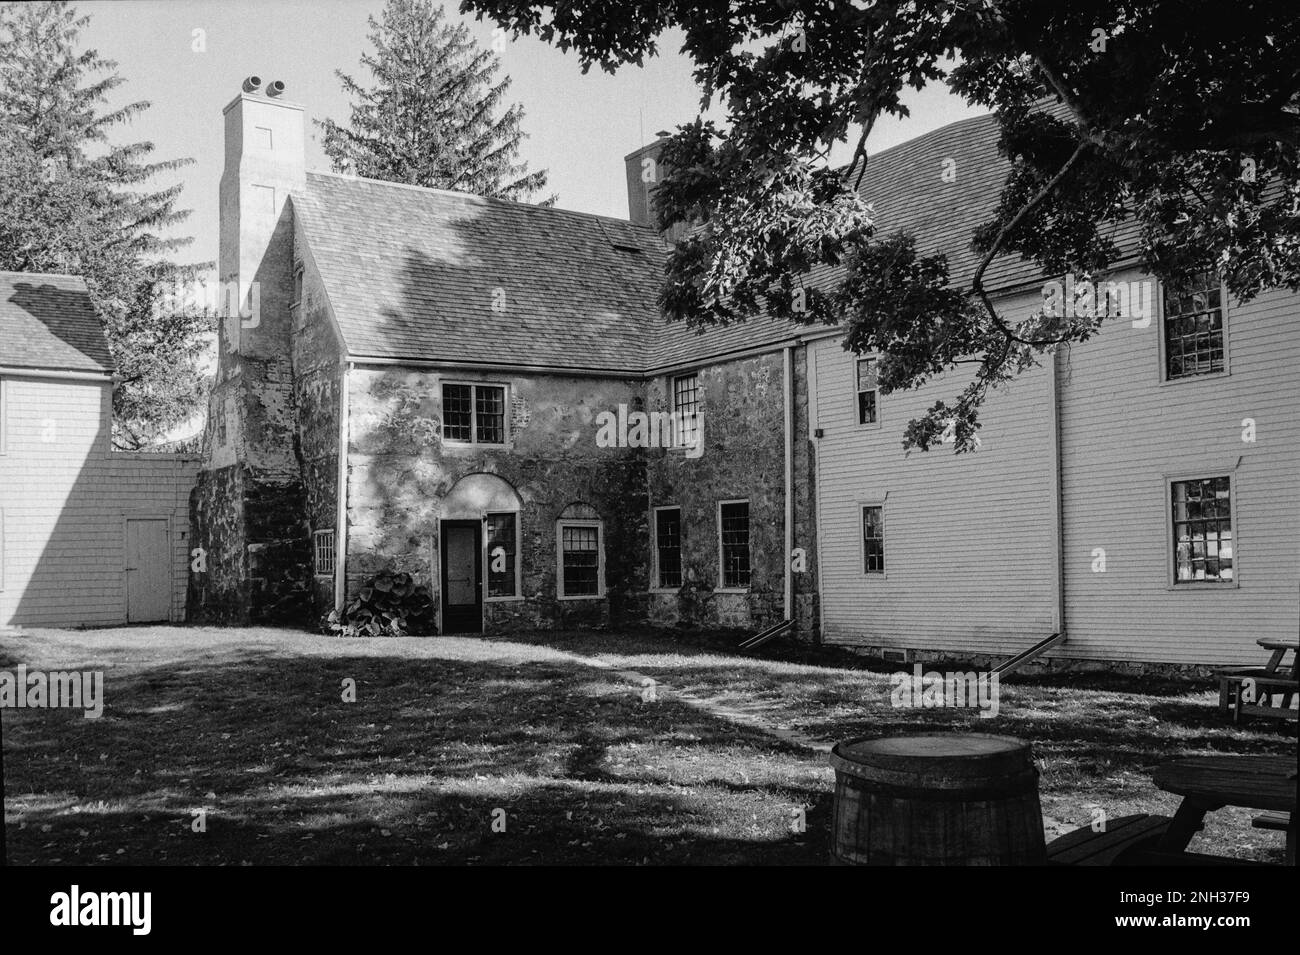 The backside of Spencer-Peirce-Little farm home. The image was captured on analog black and white film. Newbury, Massachusetts USA. Stock Photo